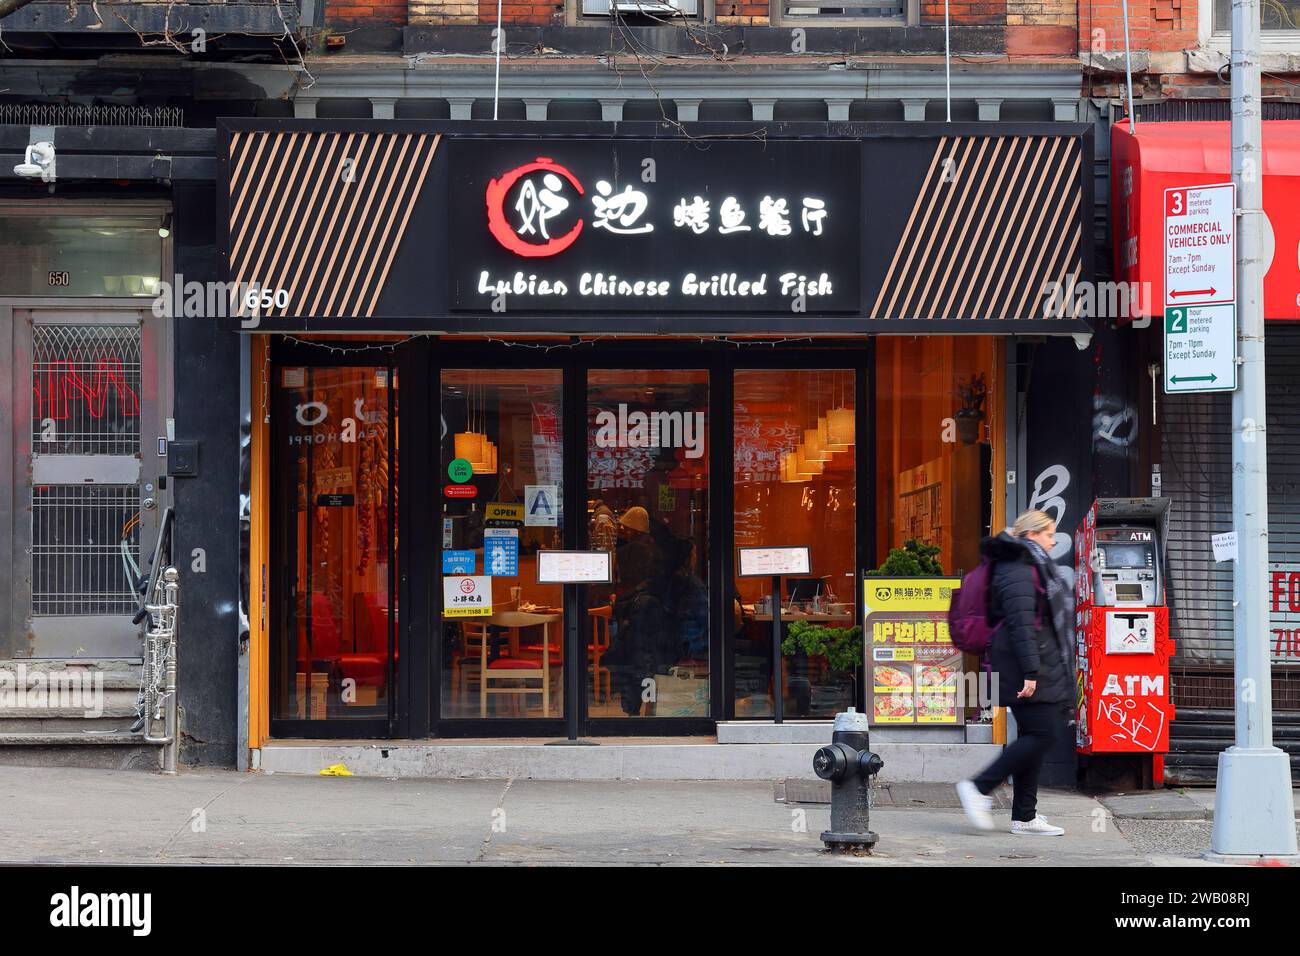 Lubian Chinese Grilled Fish 爐邊烤魚, 650 9th Ave, New York, New York, New York foto di un ristorante cinese Sichuan all'Hells Kitchen di Manhattan. Foto Stock